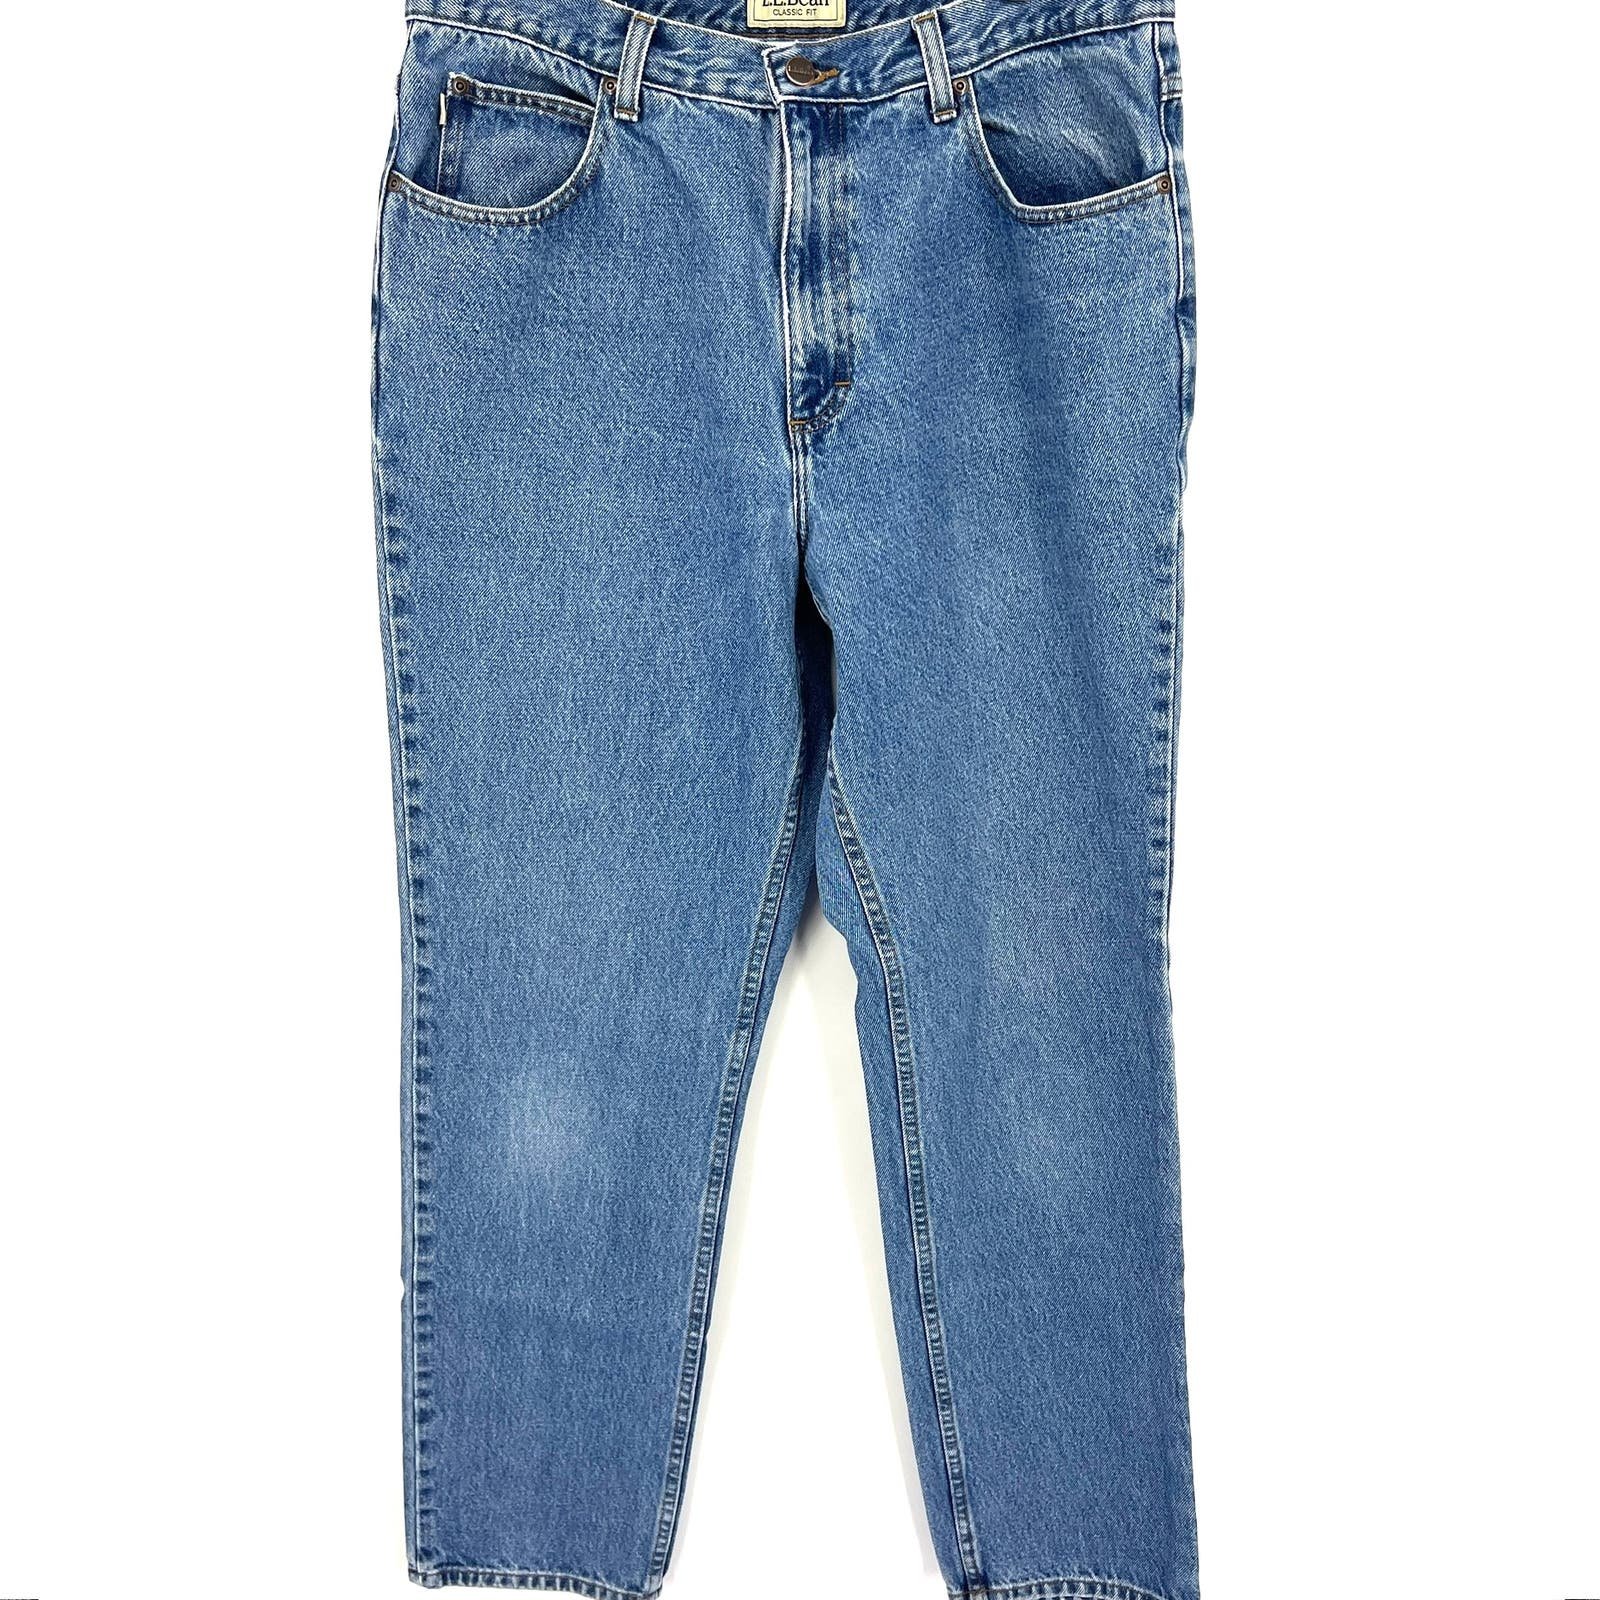 Great L. L. Bean High Rise Classic Fit Jeans 35 x 34 mmiiMUM4V Discount